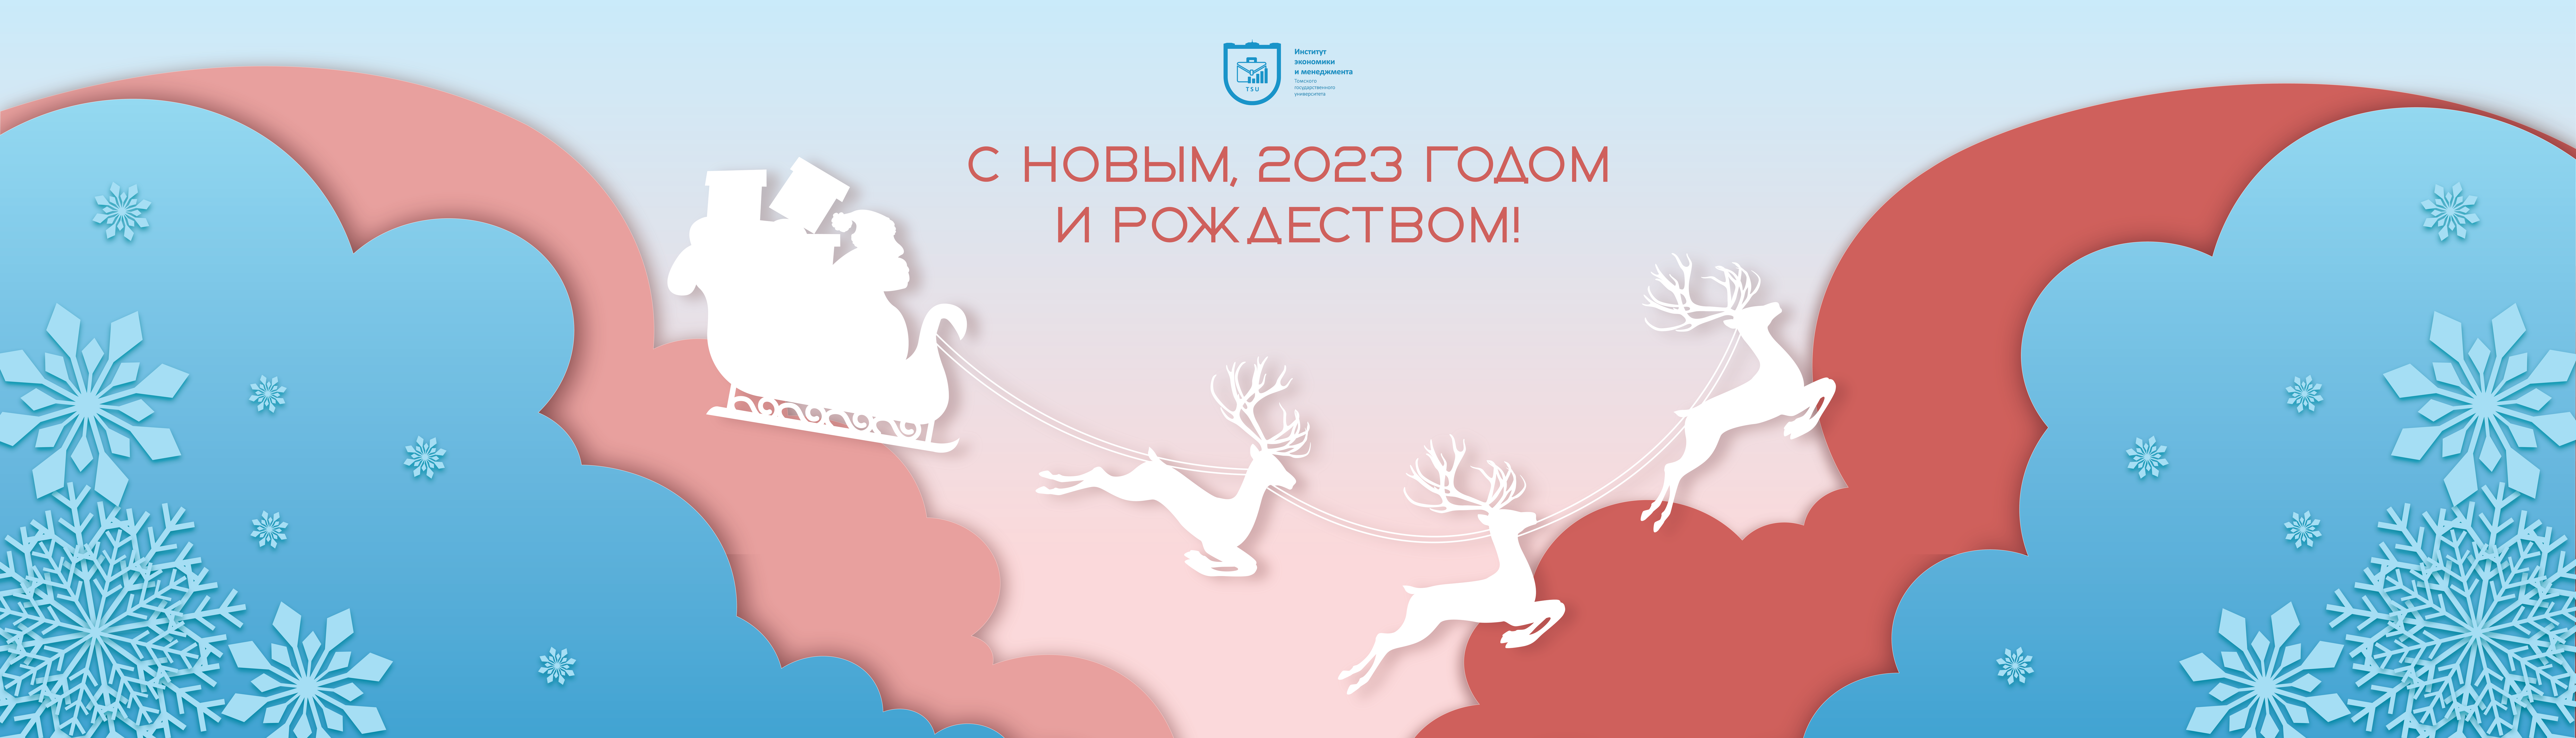 Congratulations from Evgeniya Nekhoda, the IEM Director, on the upcoming New Year